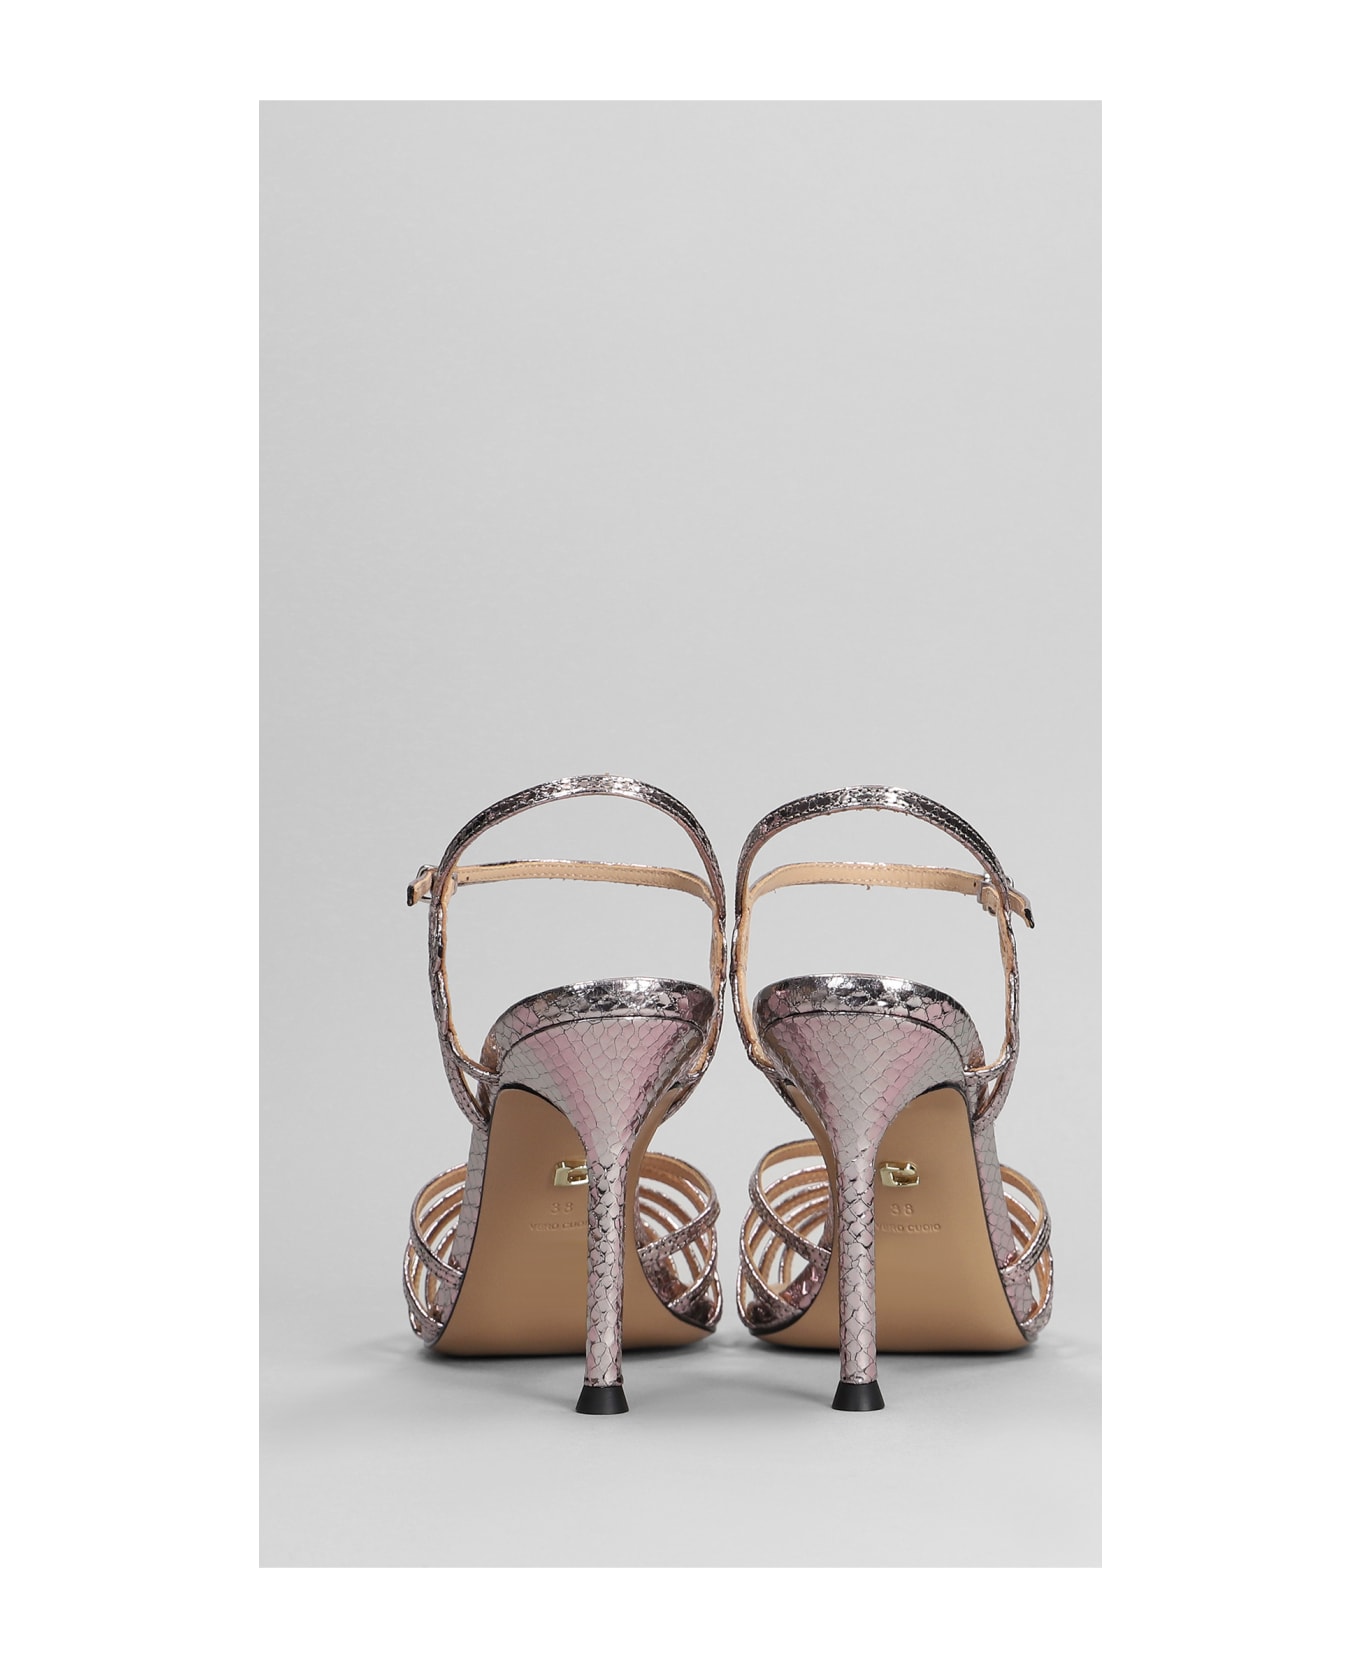 Lola Cruz Tango 95 Sandals In Viola Leather - Viola